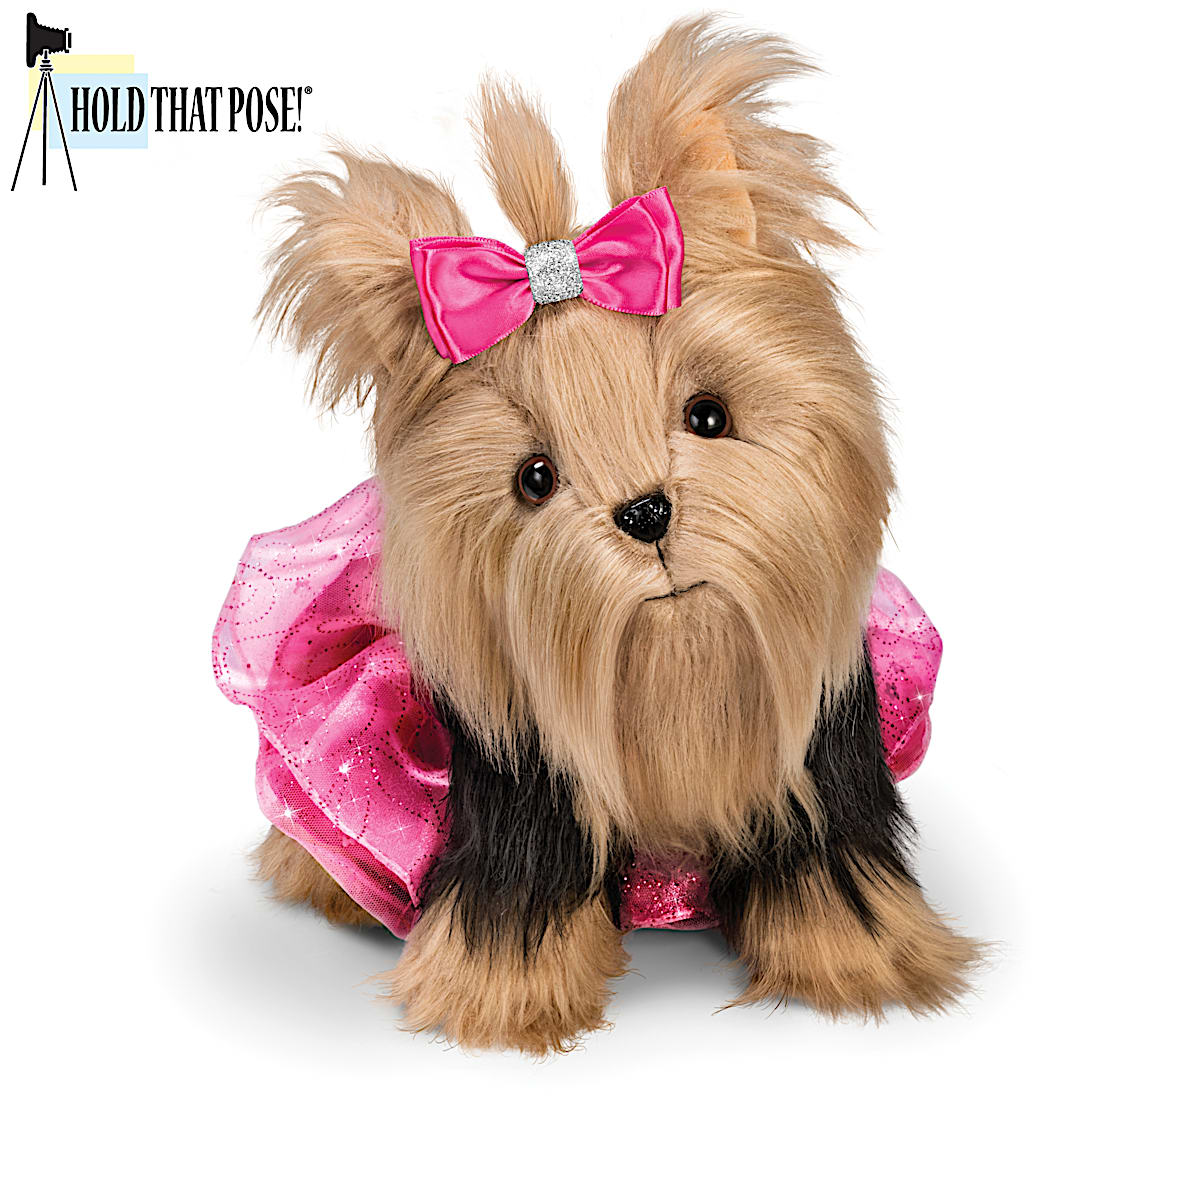 Hold That Pose Pampered Pooch Plush Yorkie Dog & Custom-Designed